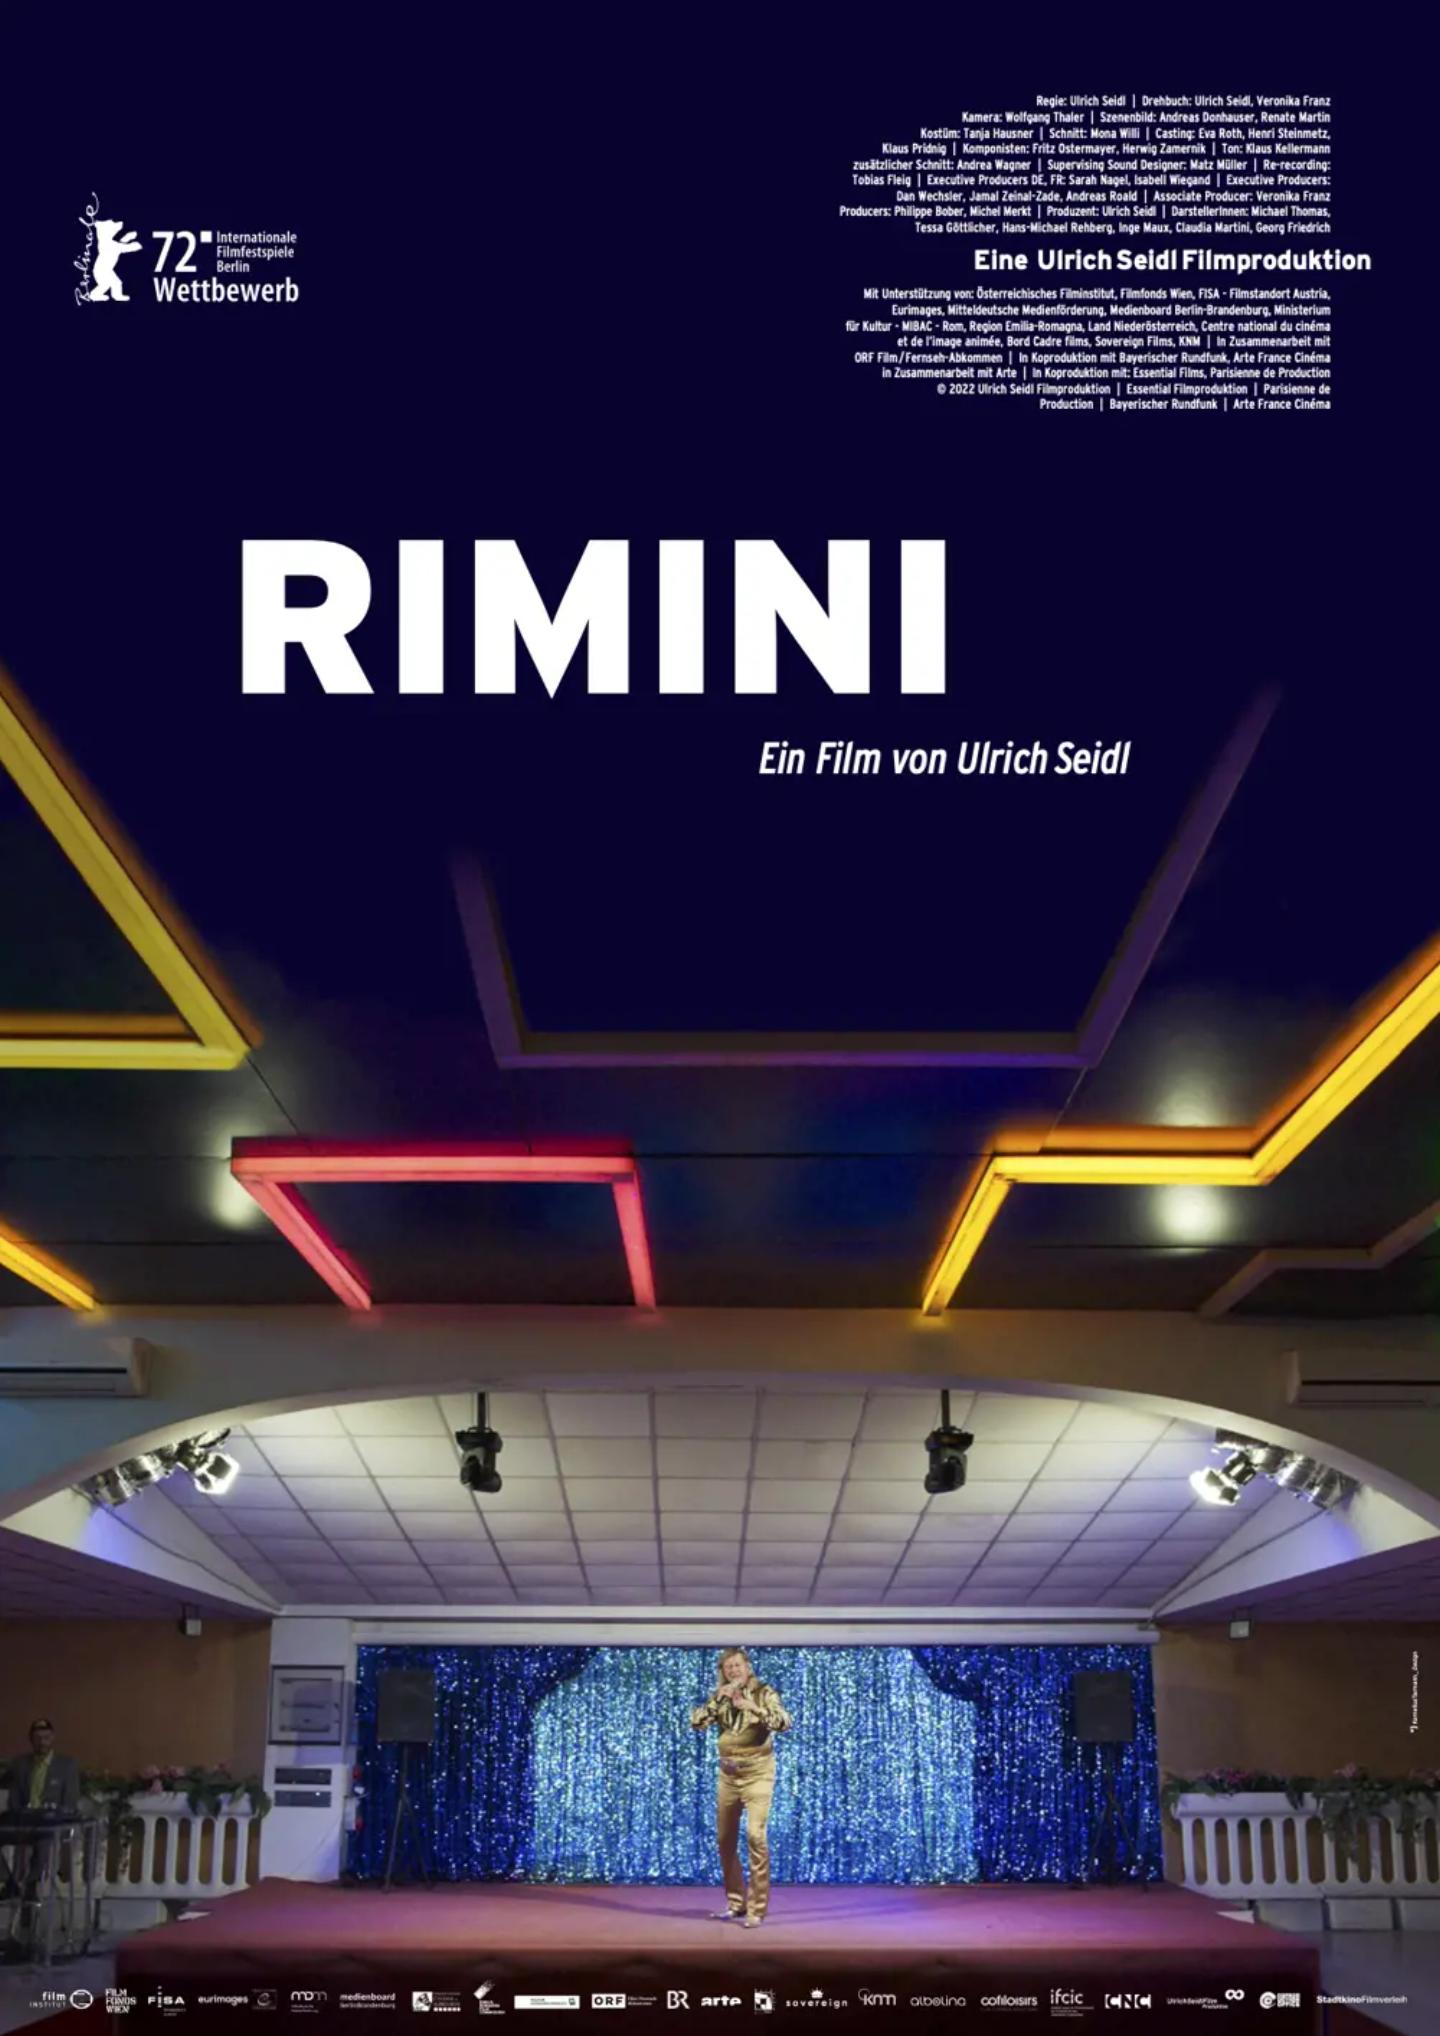 Plakat for 'Rimini'